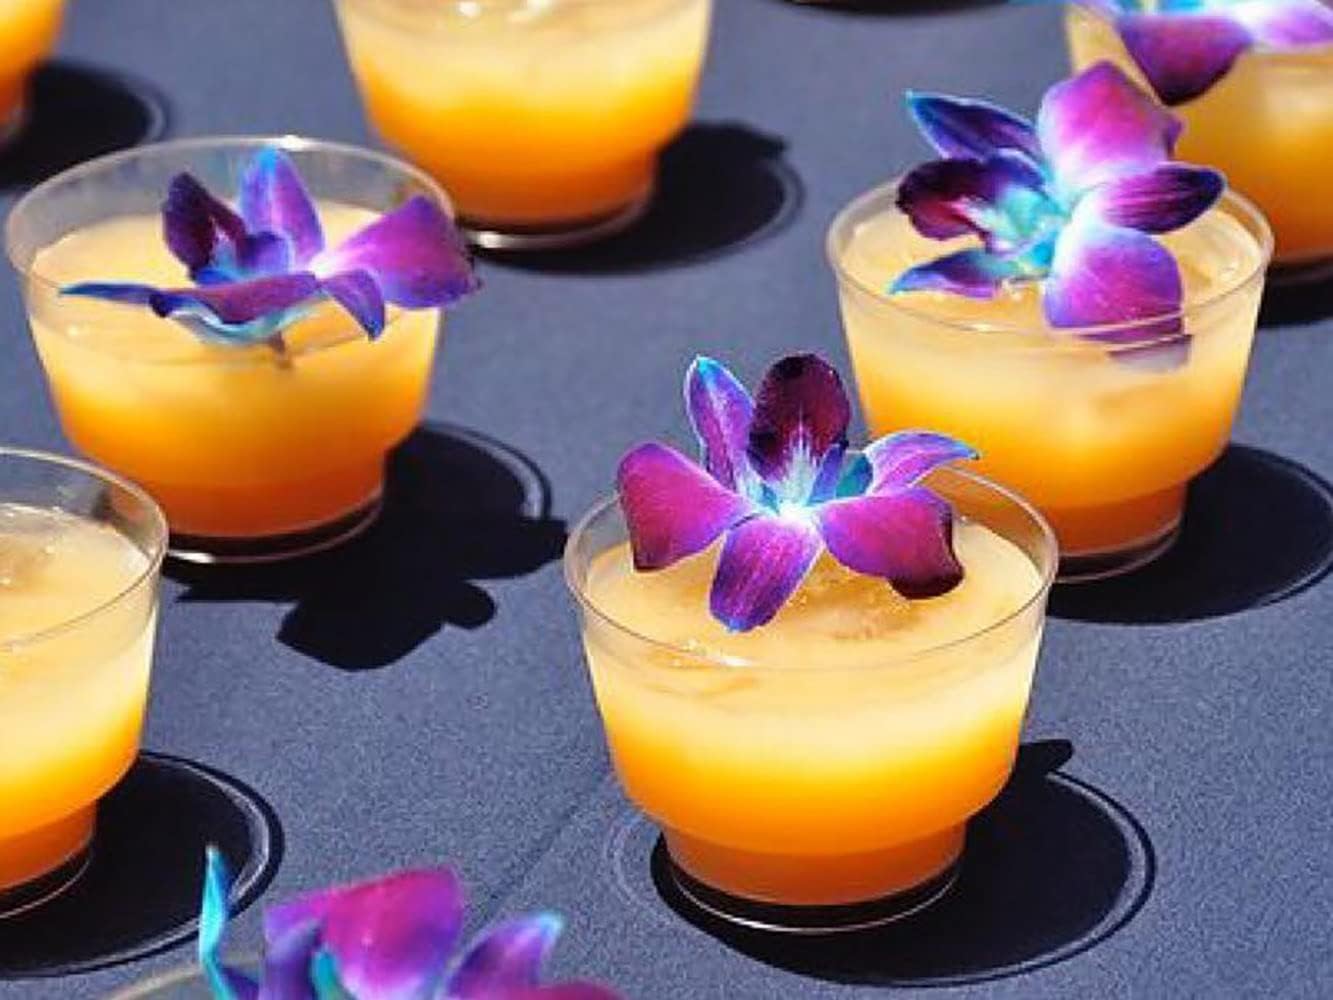 100 Rainbow Orchid Loose Bloom Subscription Fresh Cut Flowers